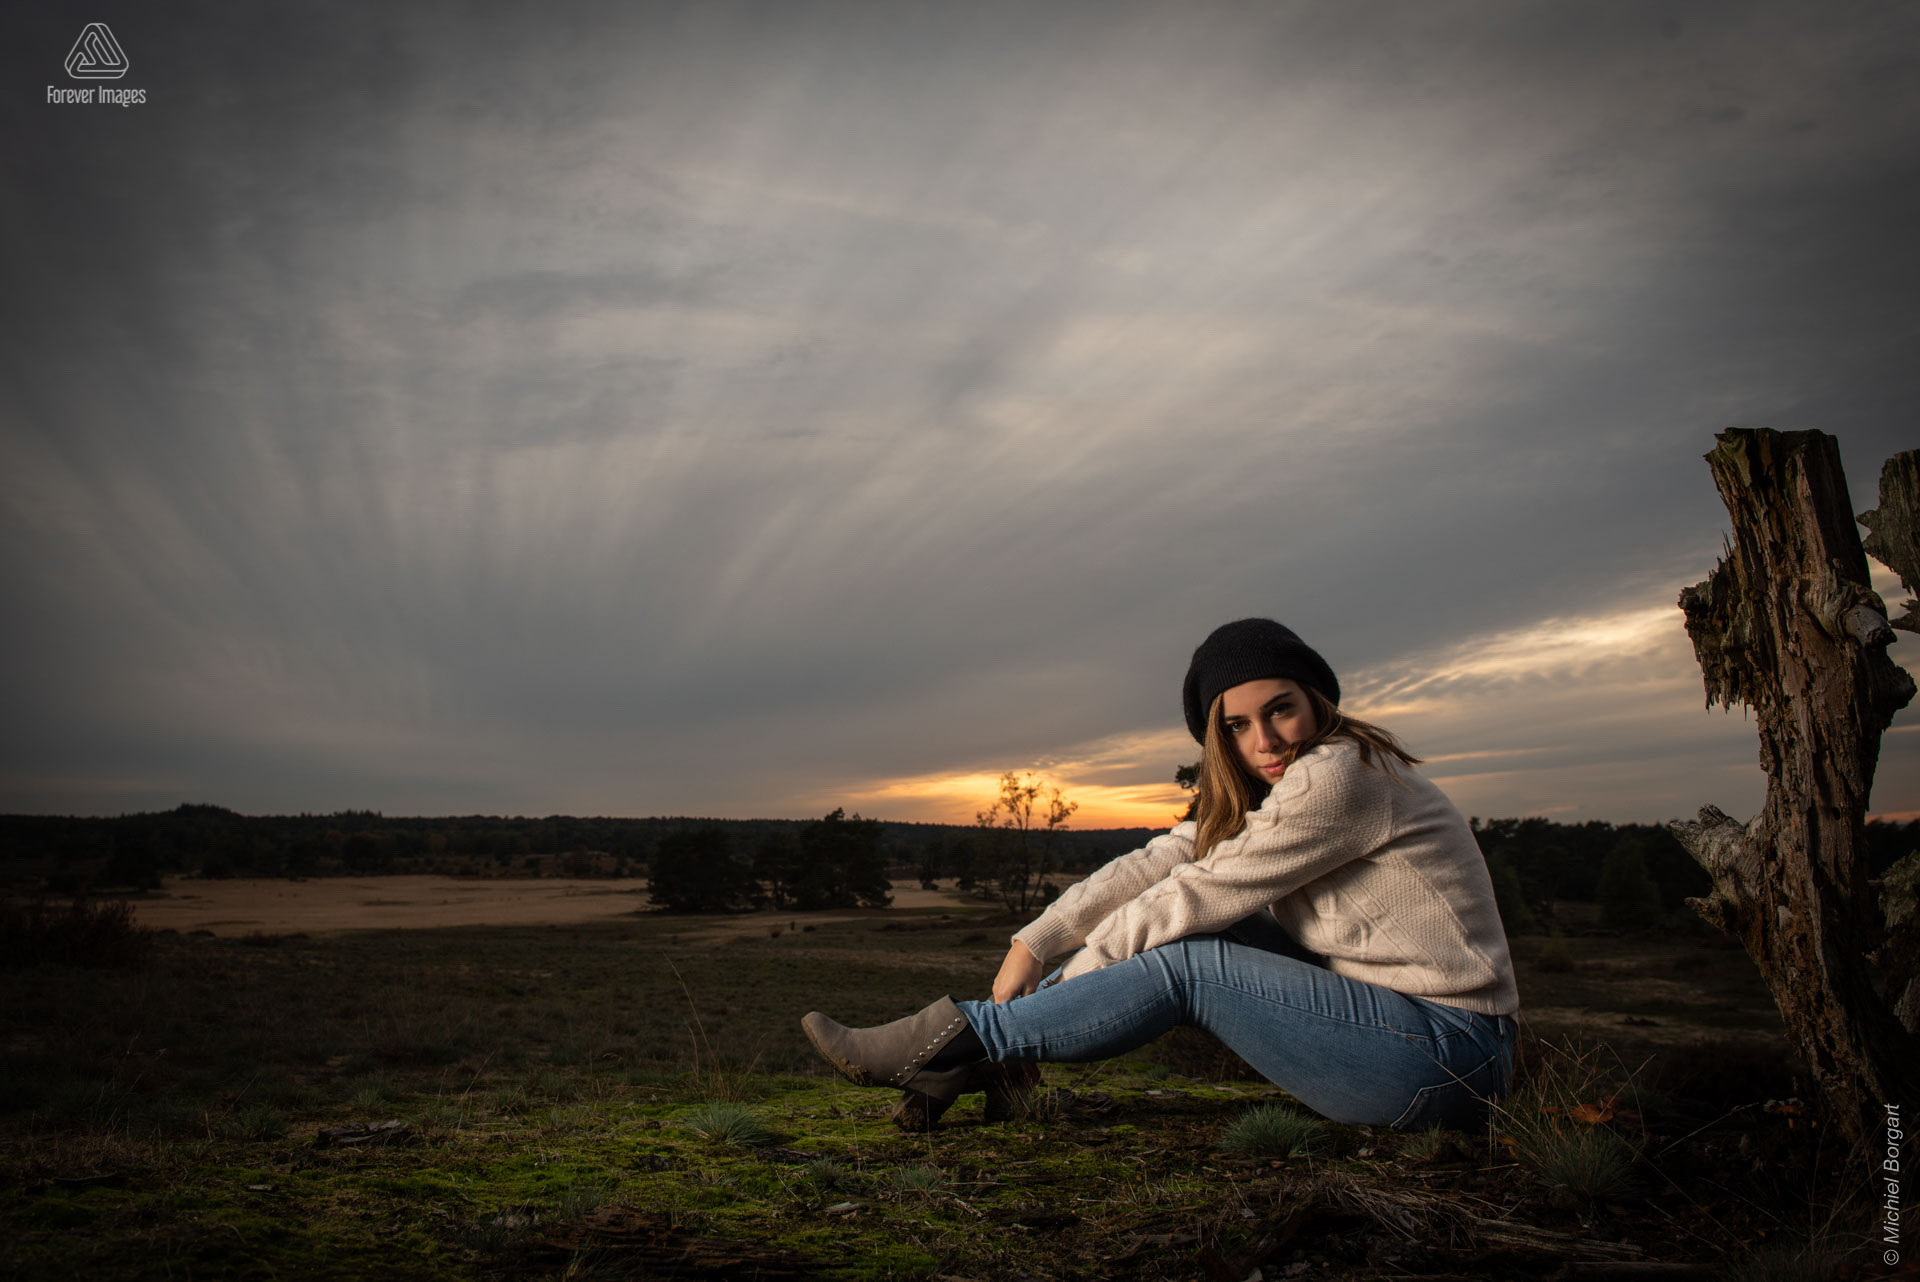 Portretfoto dame zittend naast boomstronk zonsondergang | Annalisa Veluwezoom | Portretfotograaf Michiel Borgart - Forever Images.